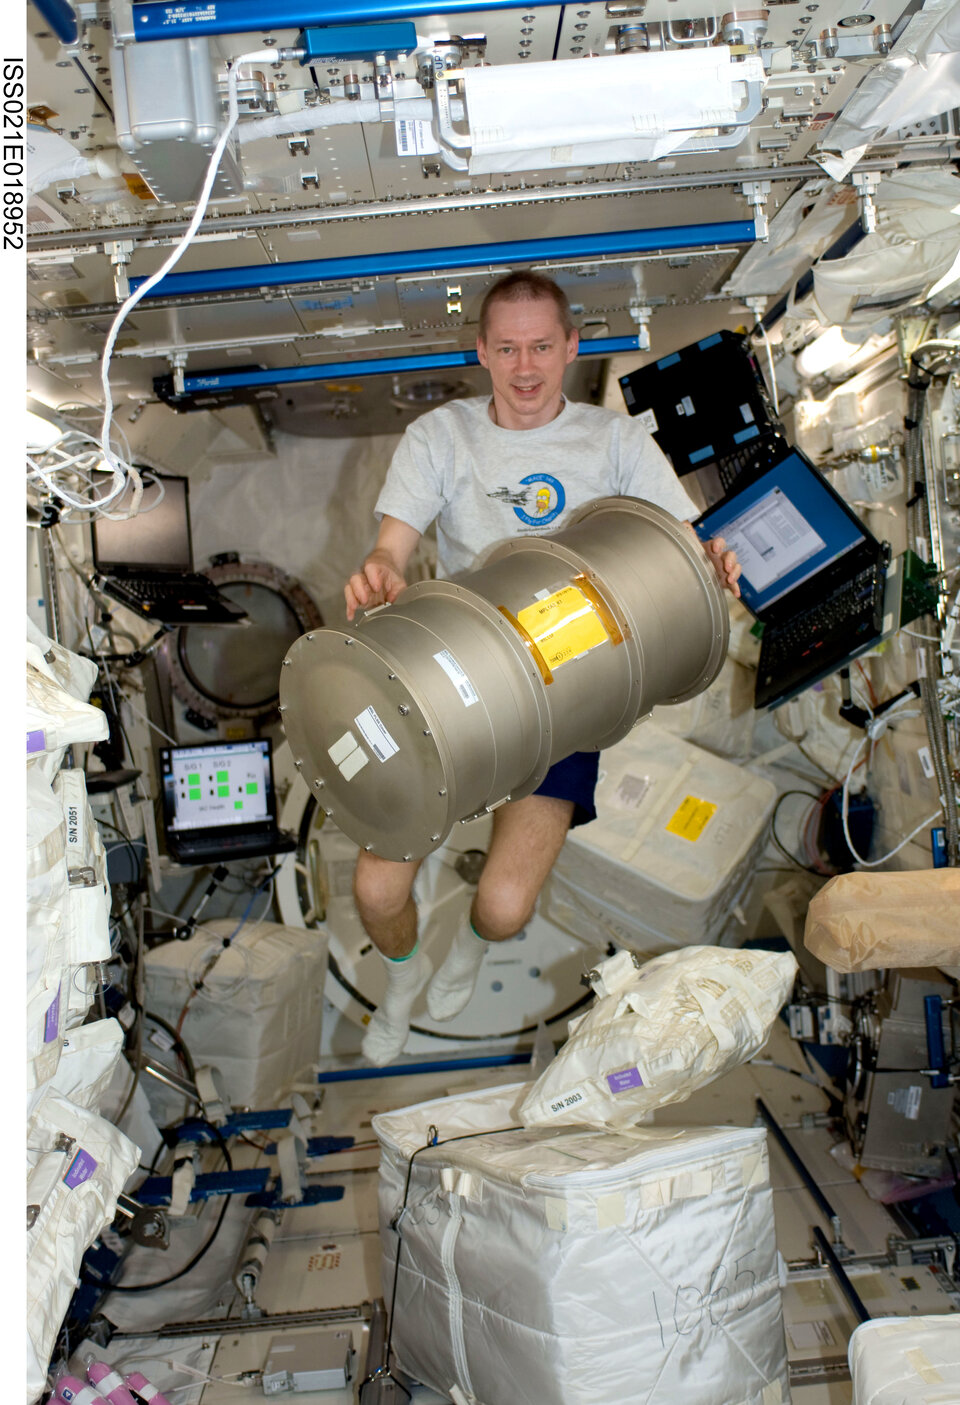 ESA astronaut Frank de Winne working with Materials Science Laboratory